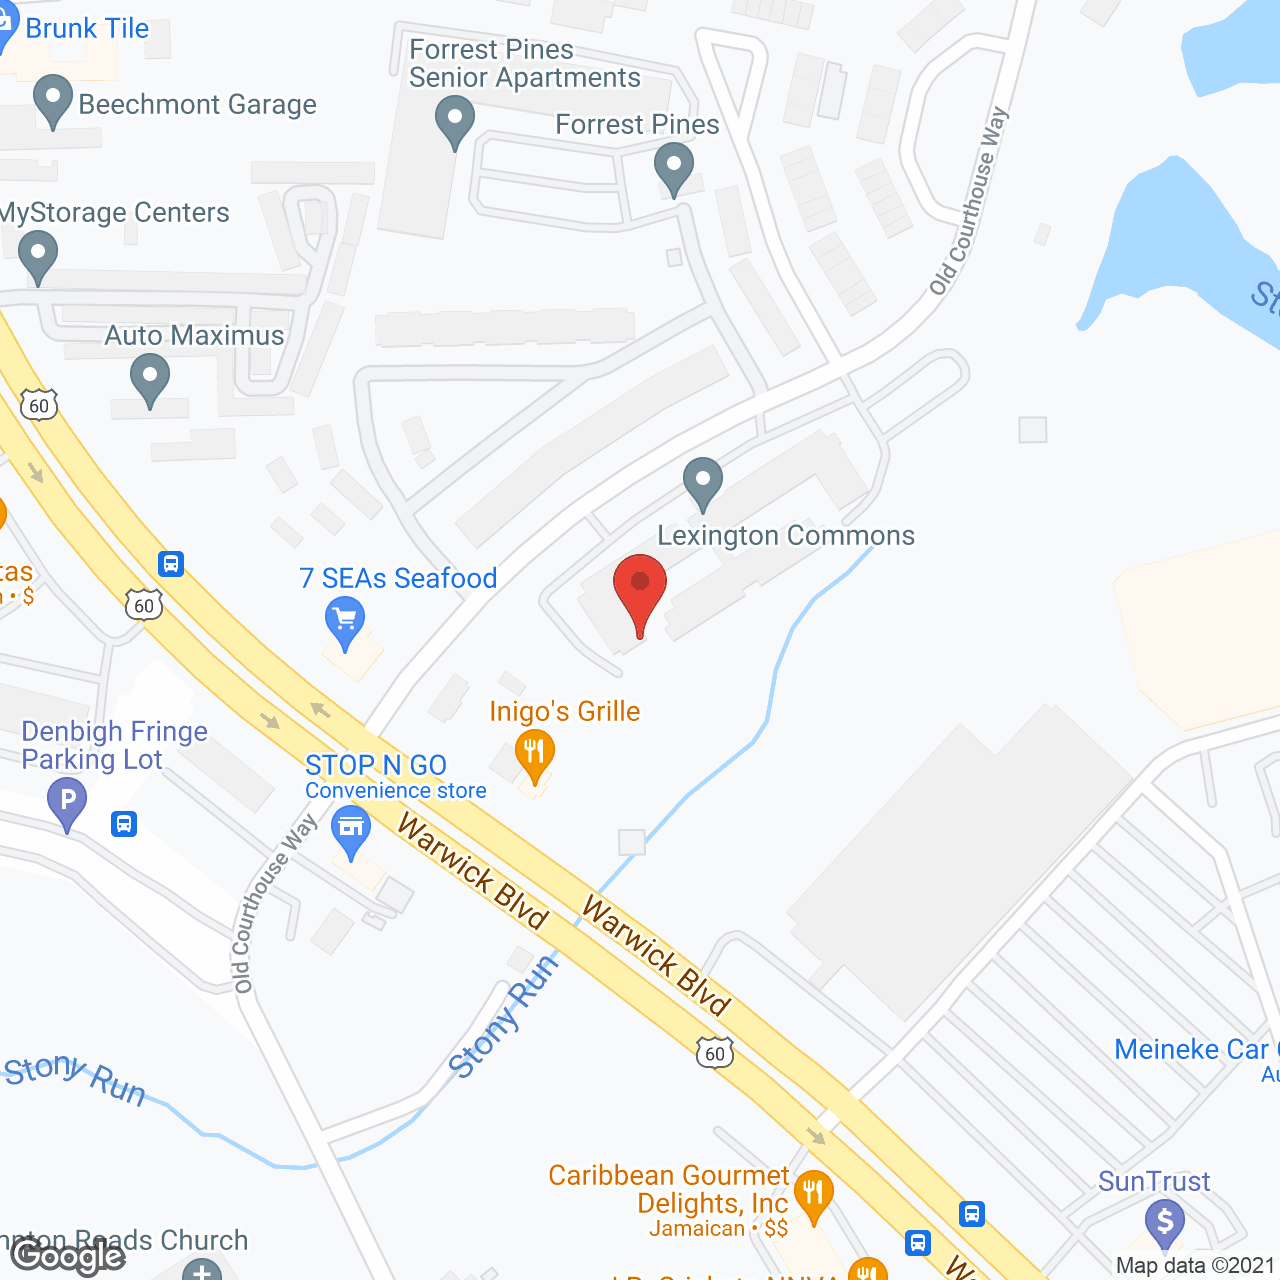 Lexington Commons in google map